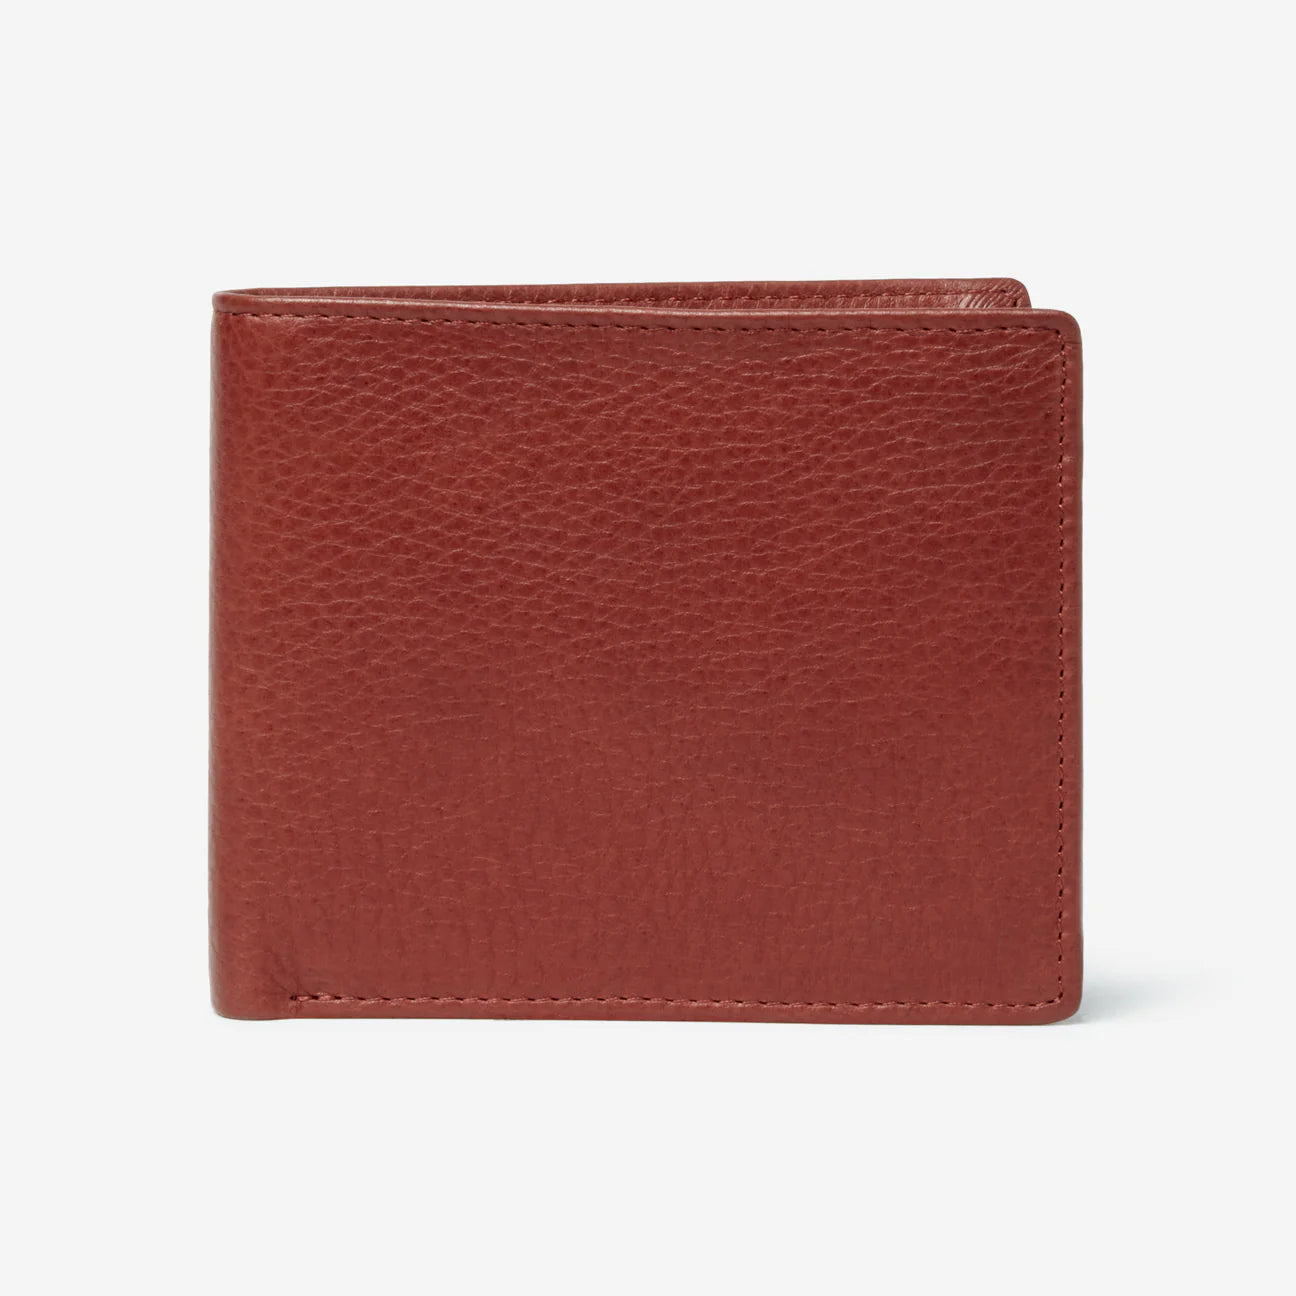 Osgoode Marley Leather RFID Flipper Billfold Leather Wallet